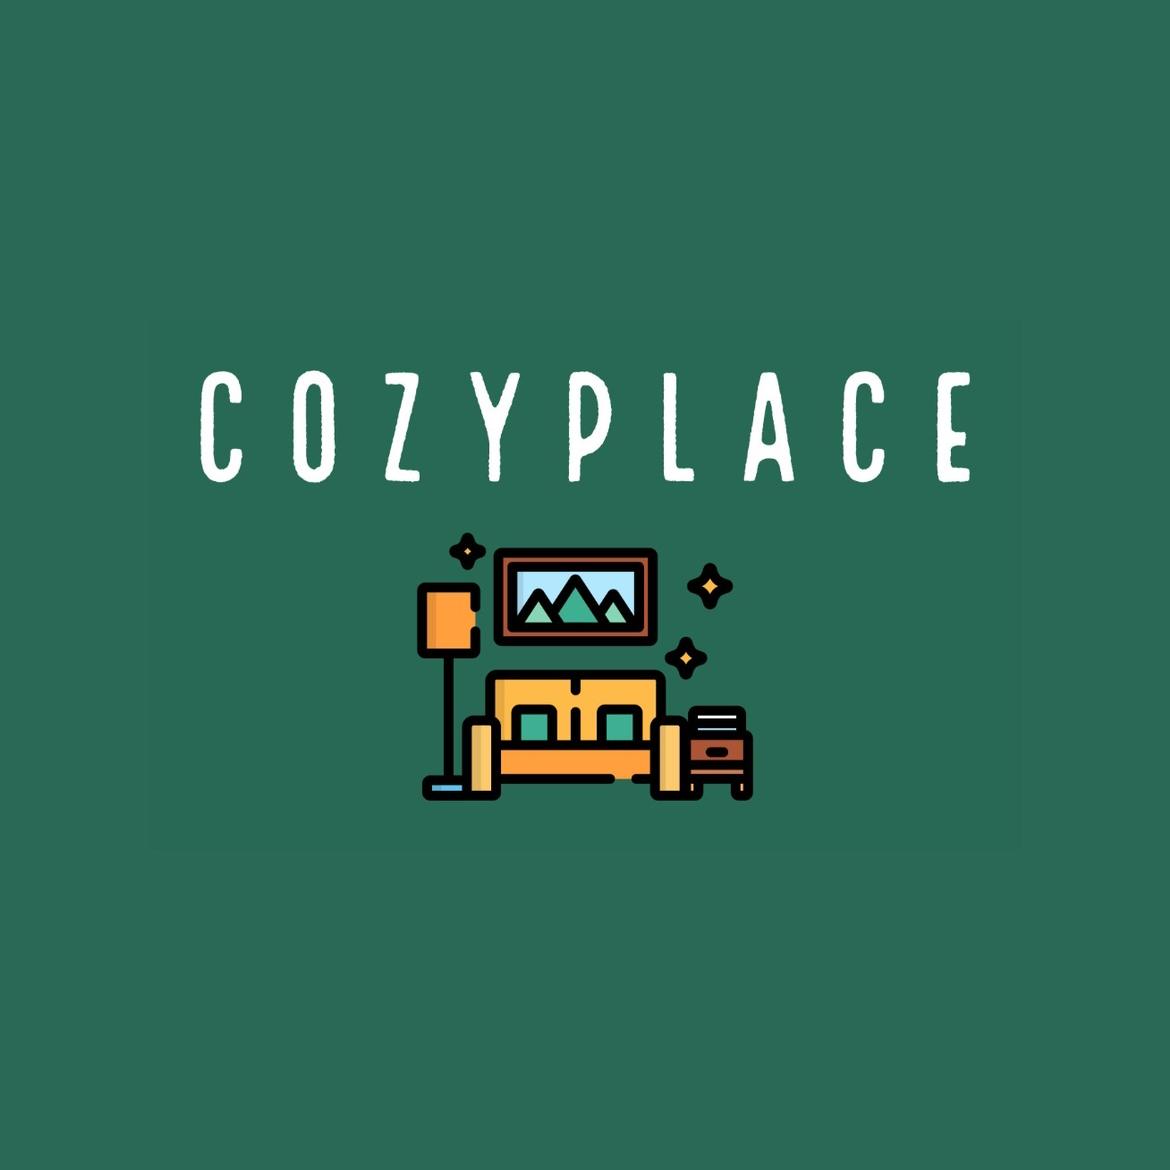 CozyPlaceSG's images